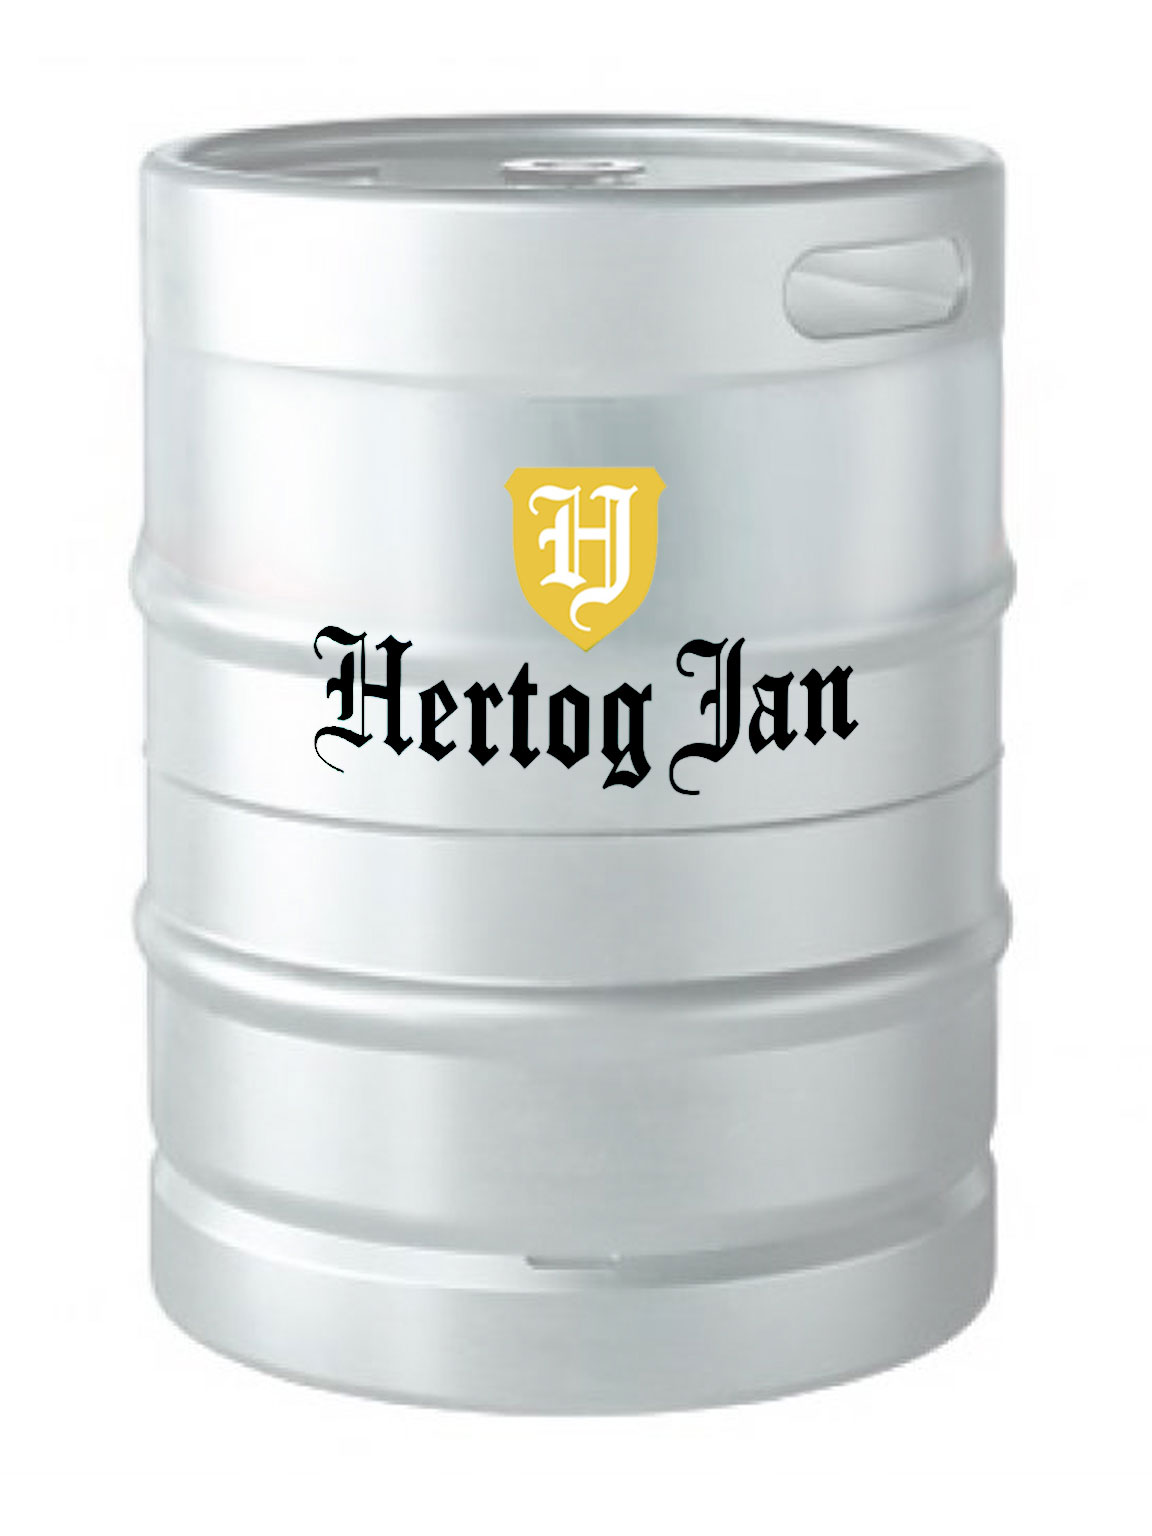 Hertog-Jan-groot-50L-1152×1536